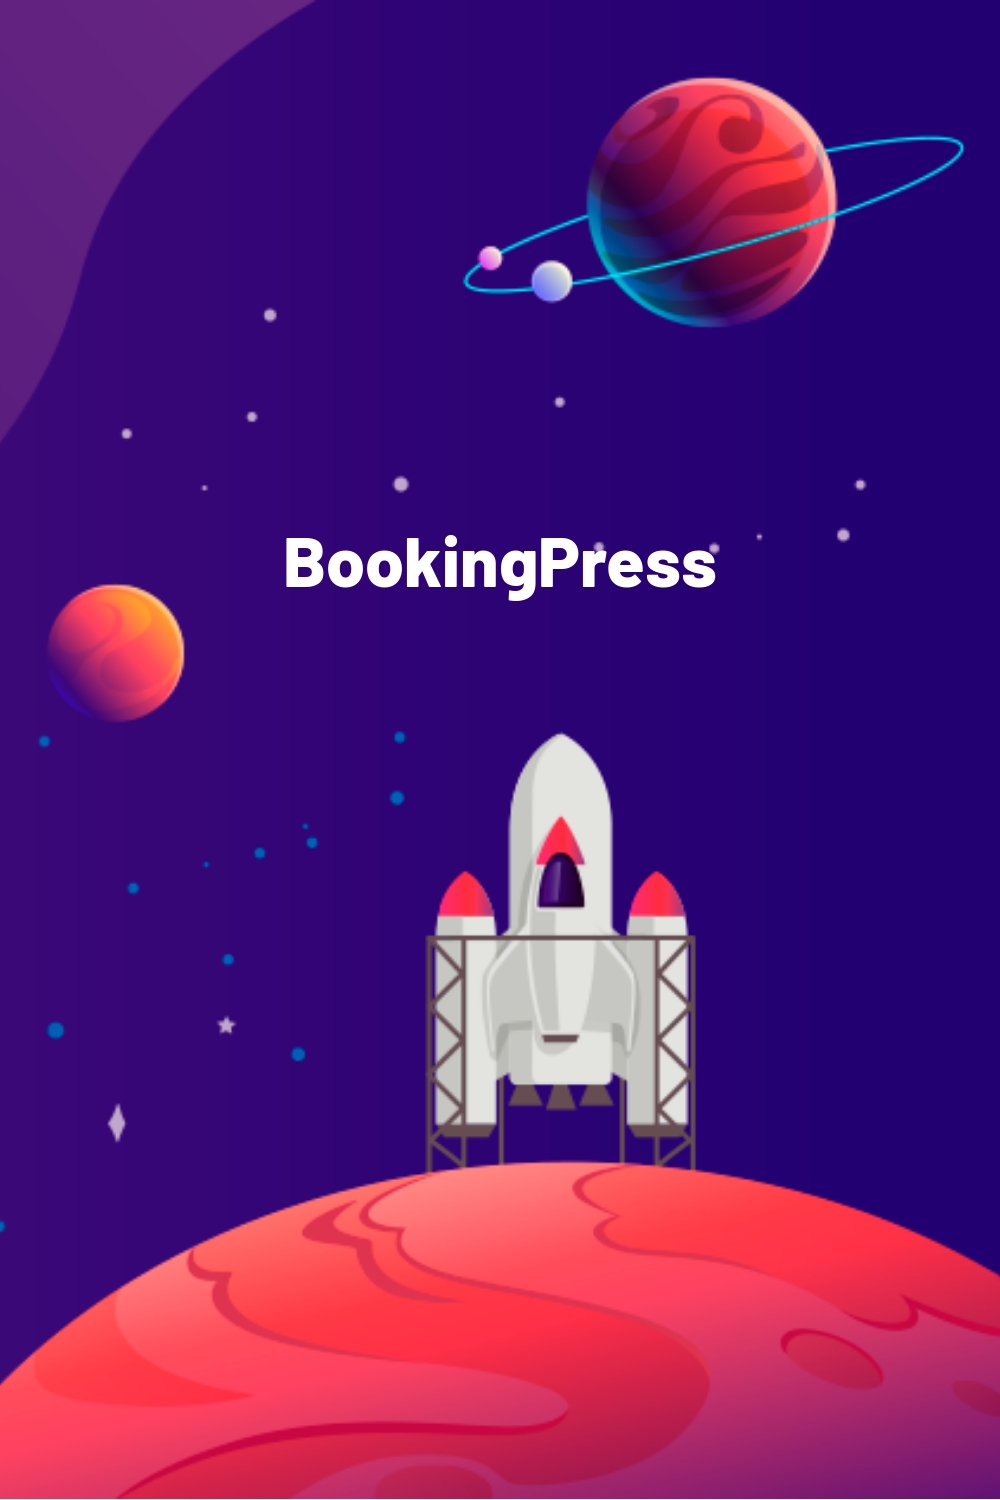 BookingPress